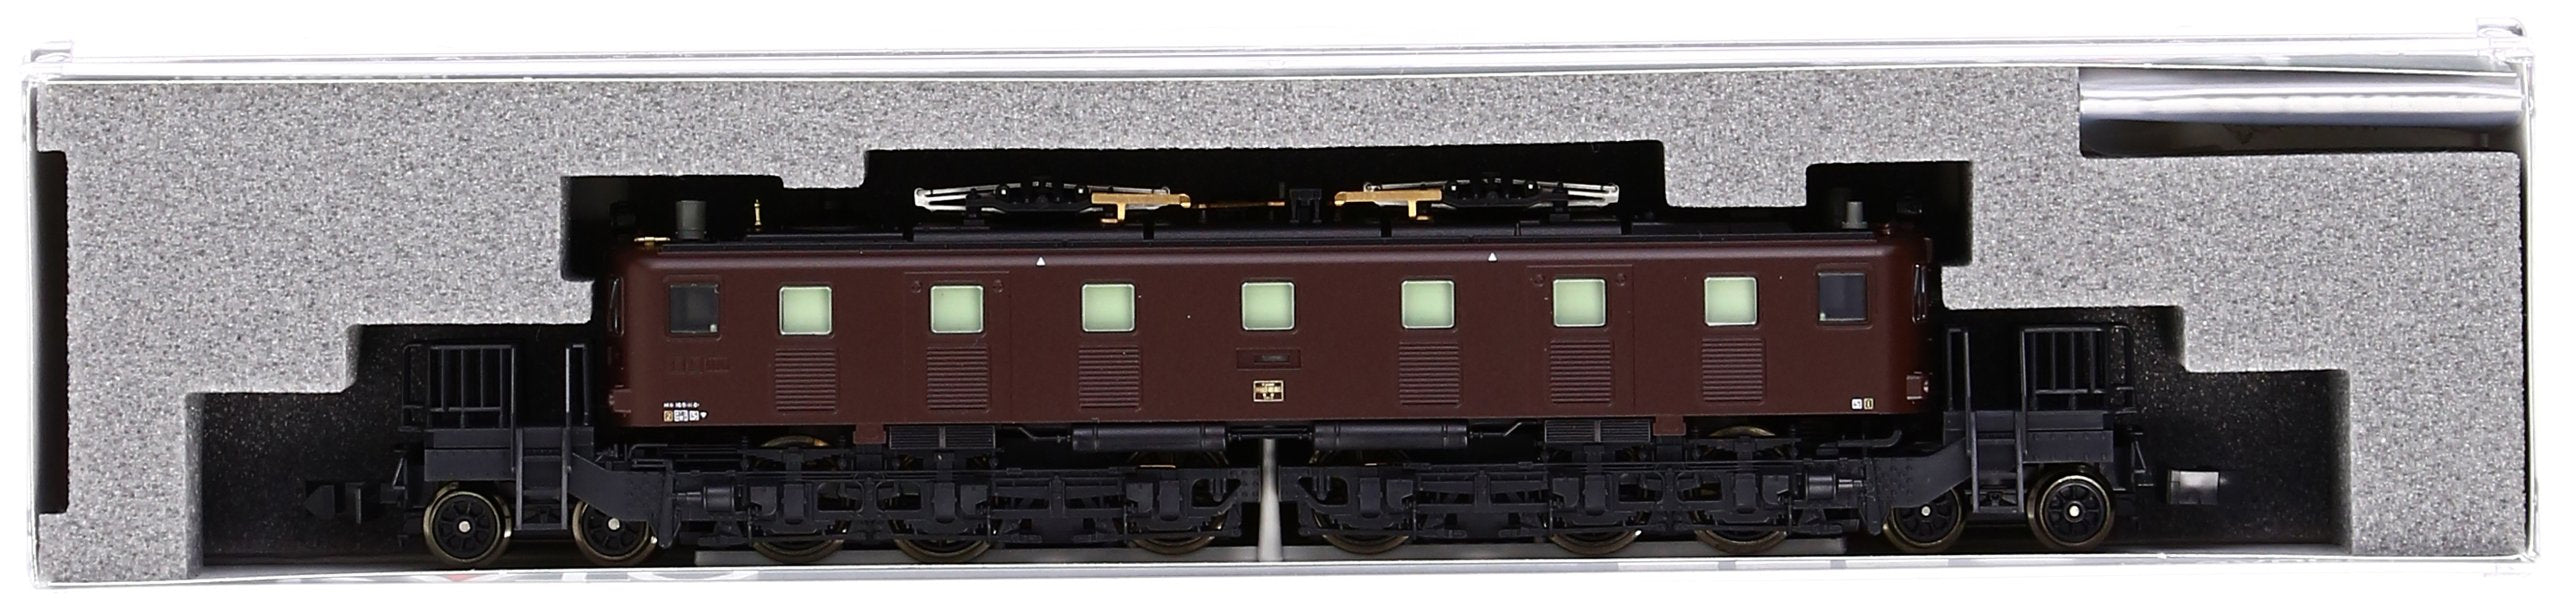 Kato Railway Model Electric Locomotive N Gauge Ef56 Primary Type 3070-1